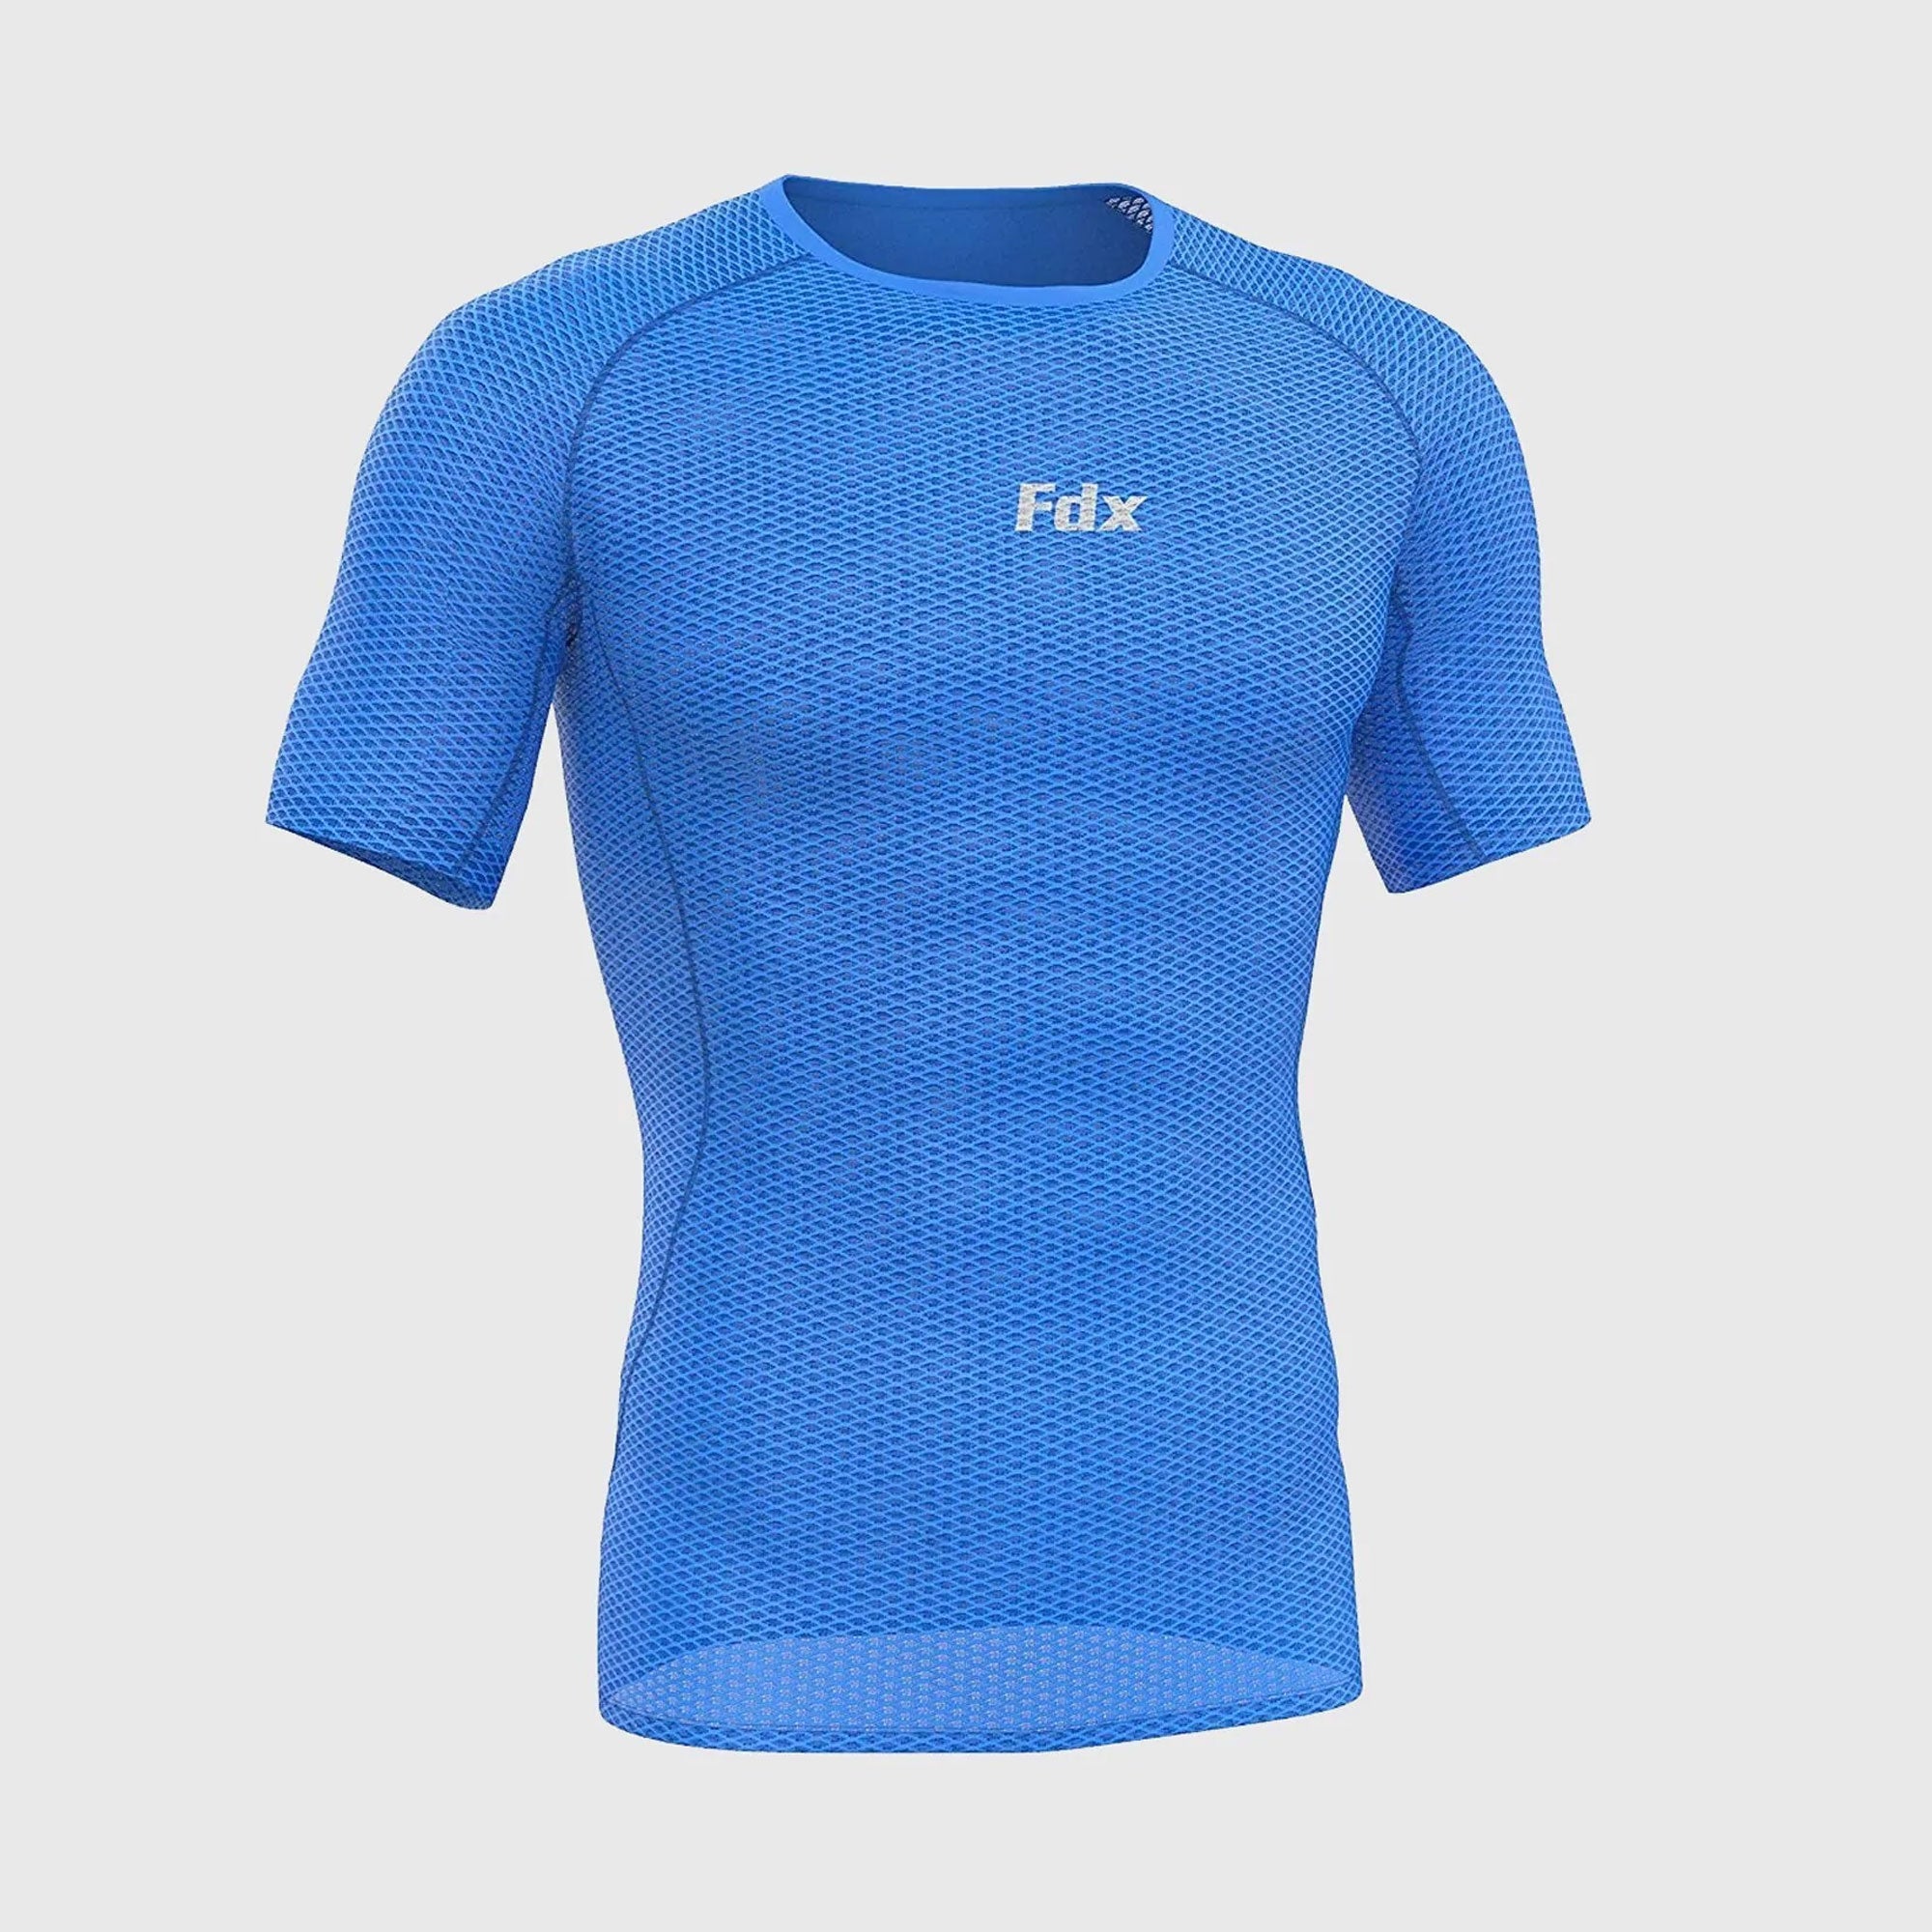 Fdx Aeroform Blue Men's Short Sleeve Mesh Summer Cycling Top